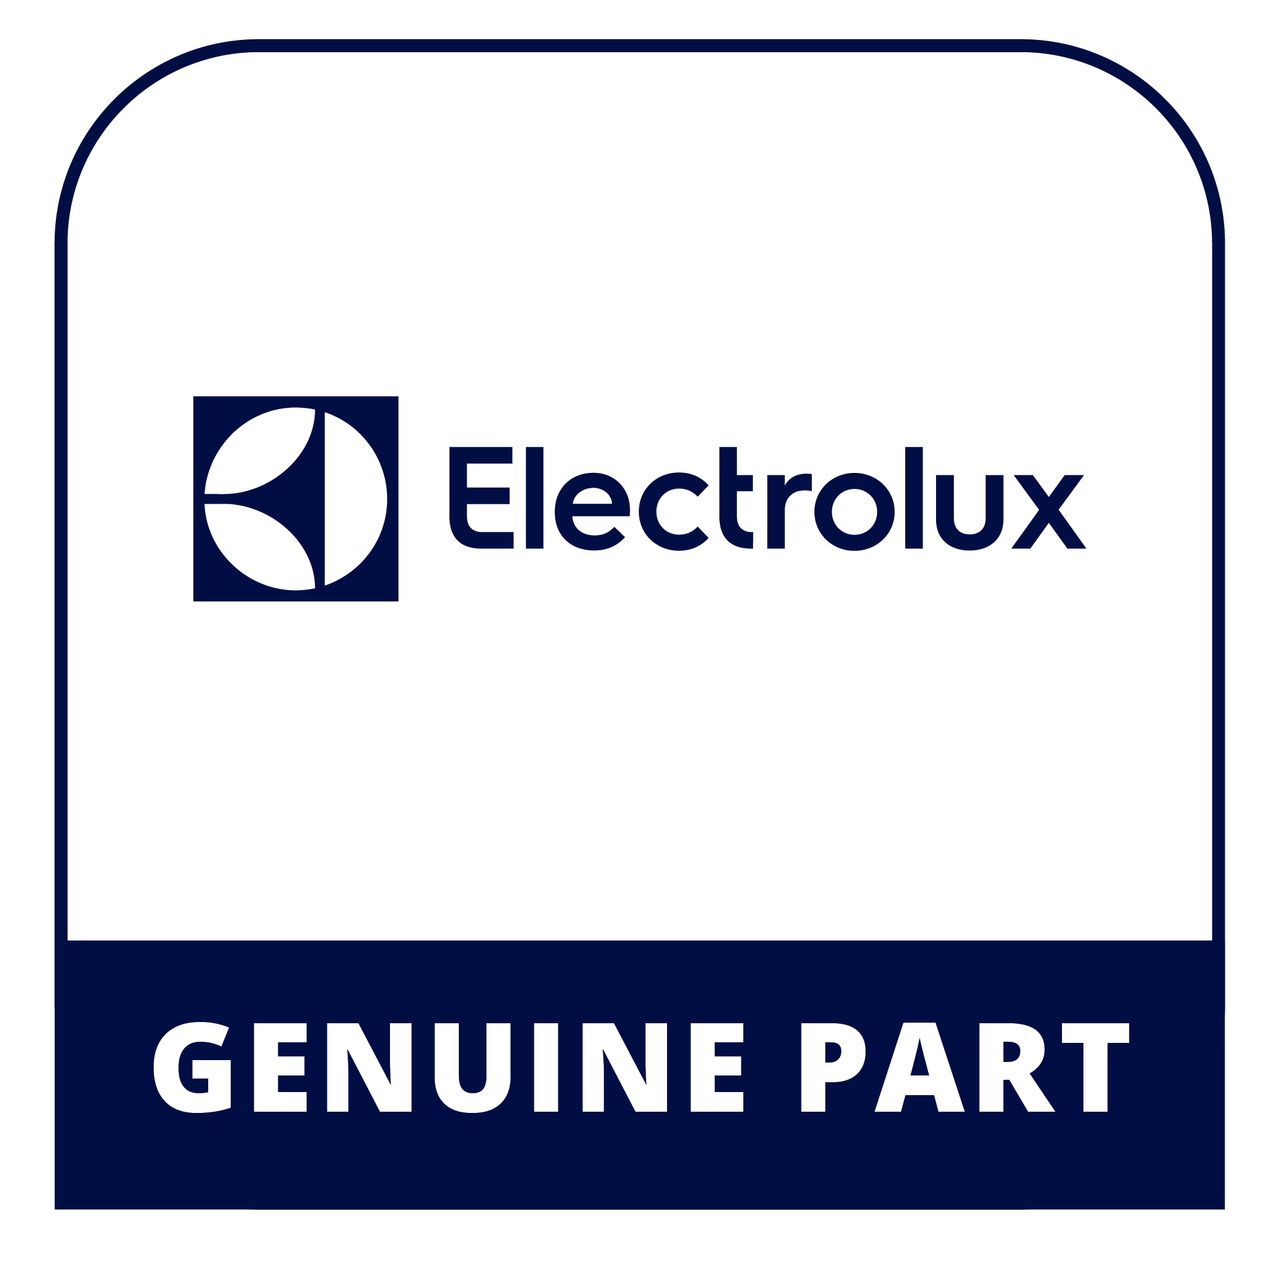 Frigidaire - Electrolux 5304499948 Motor - Genuine Electrolux Part